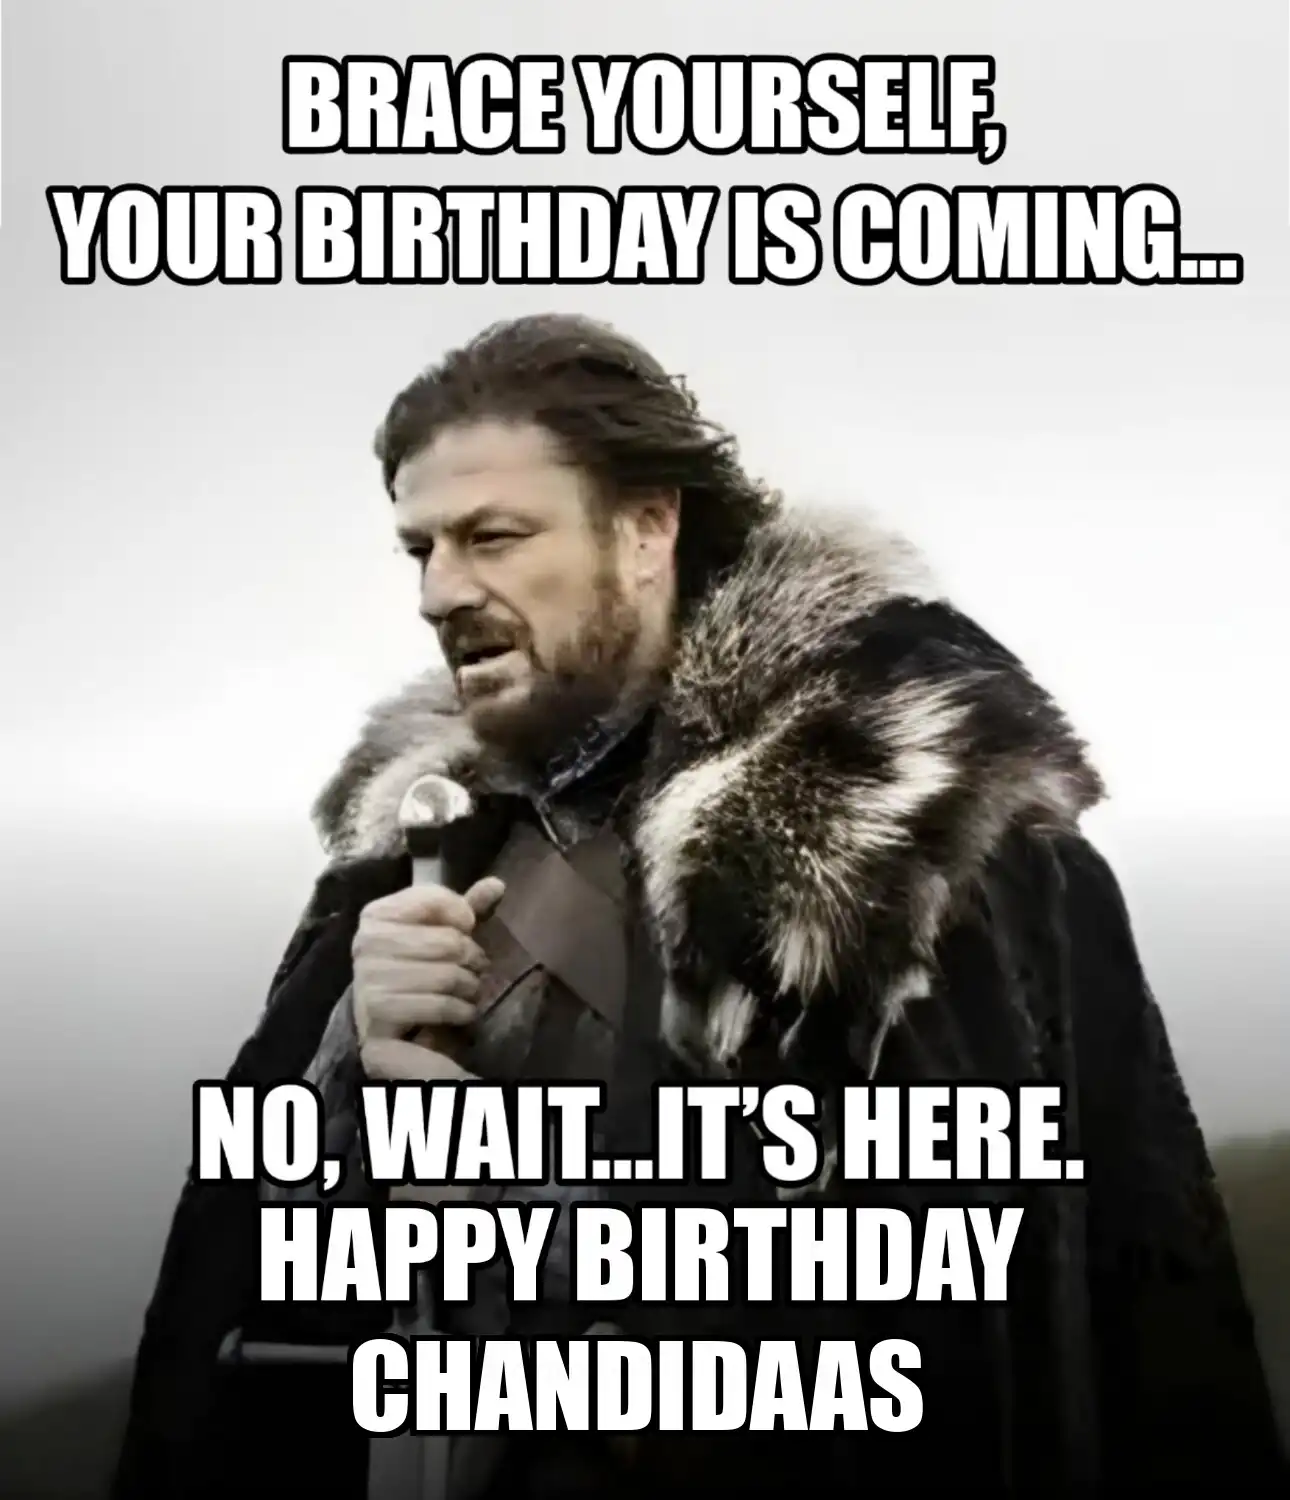 Happy Birthday Chandidaas Brace Yourself Your Birthday Is Coming Meme